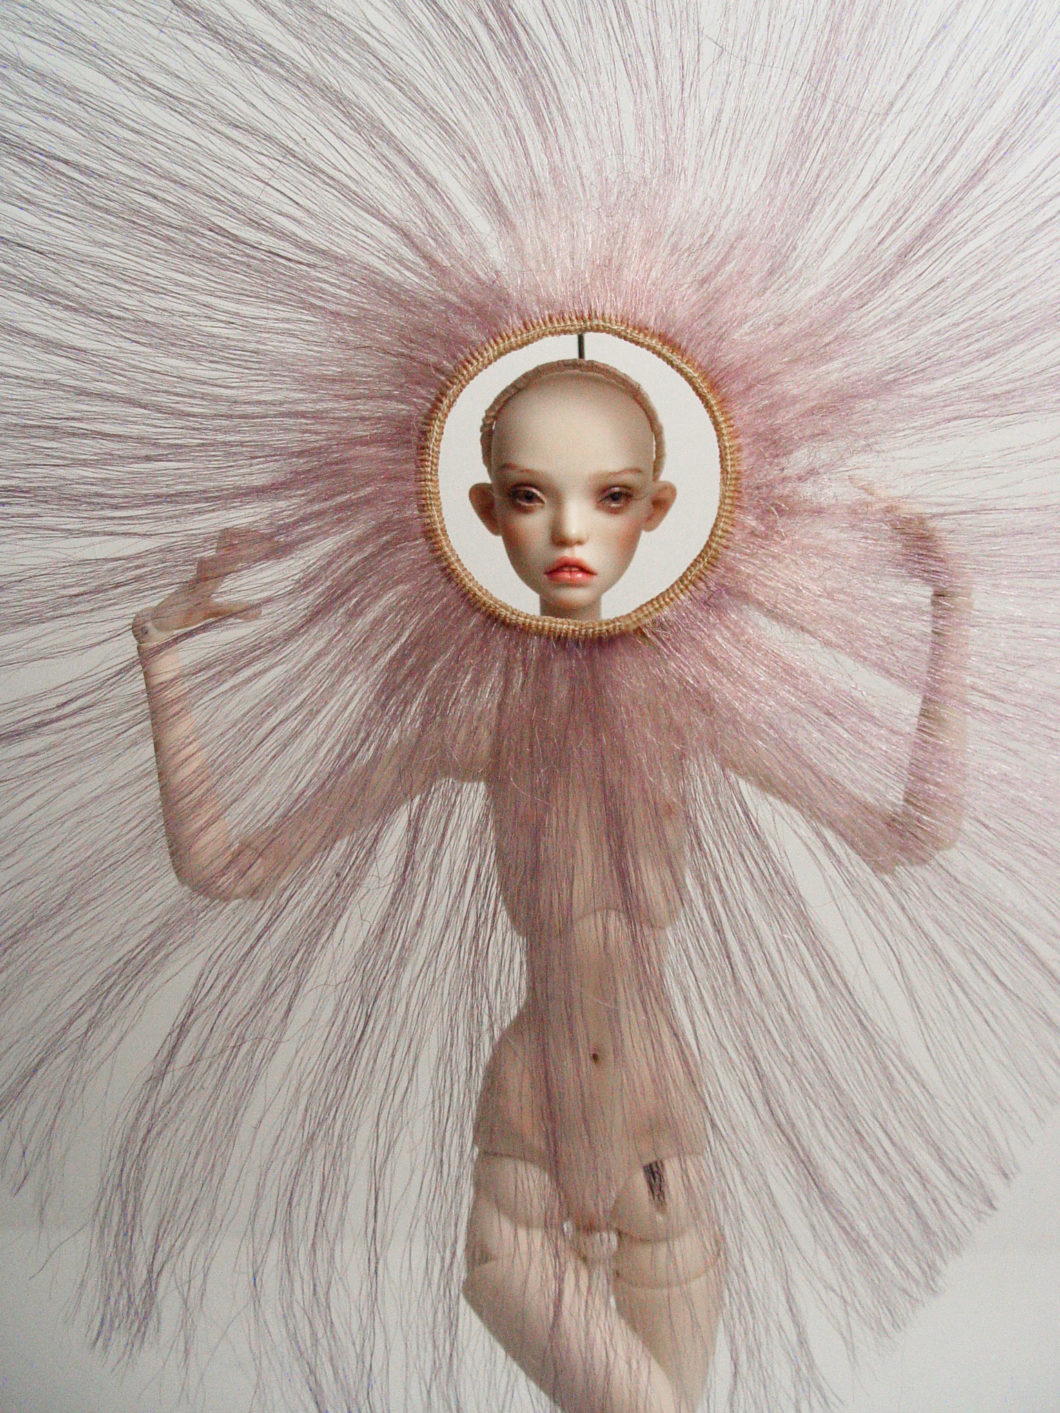 popovy bjd ball jointed doll doll pasha marmite sue enchanted doll wig